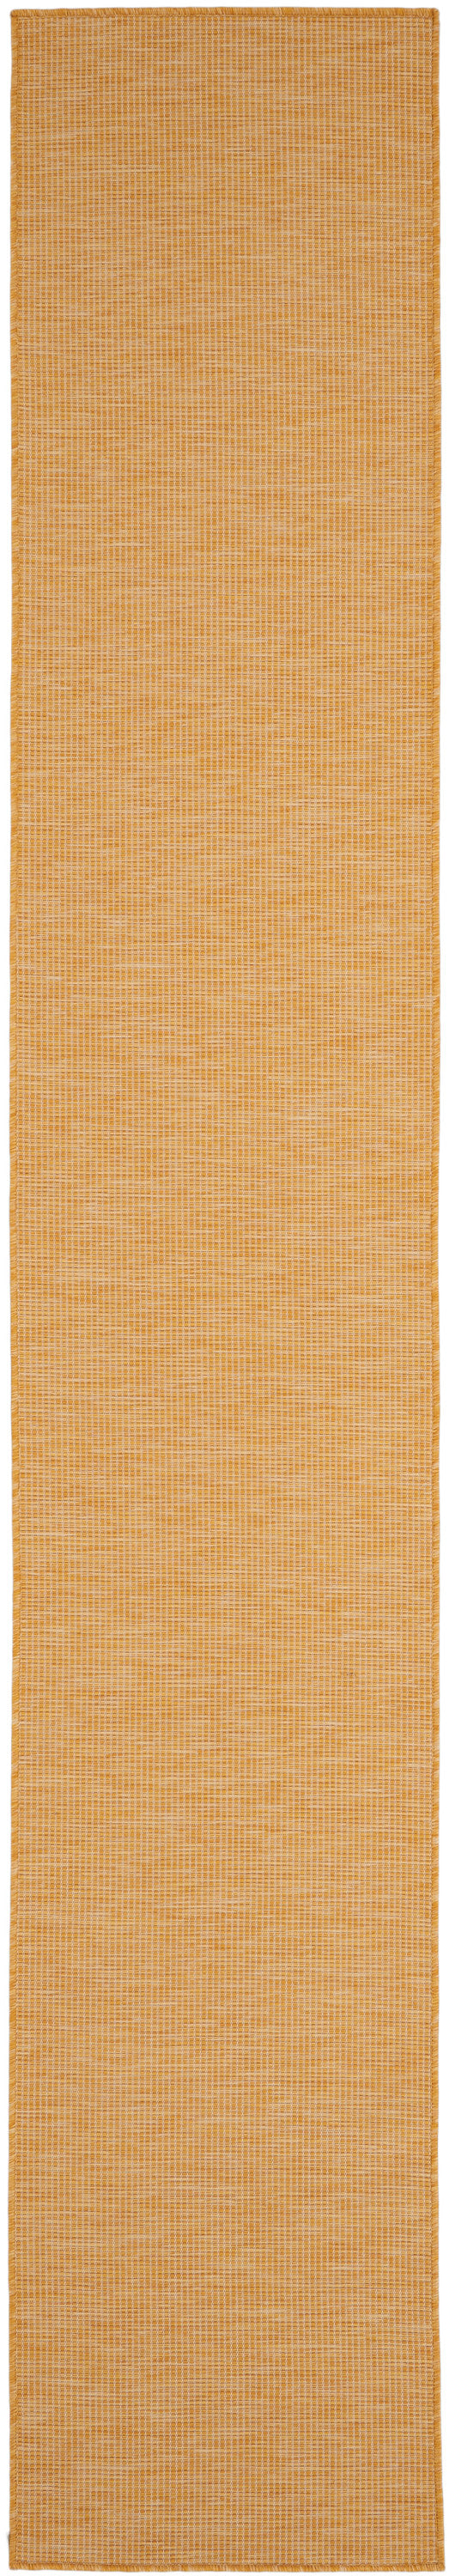 media image for positano yellow rug by nourison 99446842442 redo 3 290